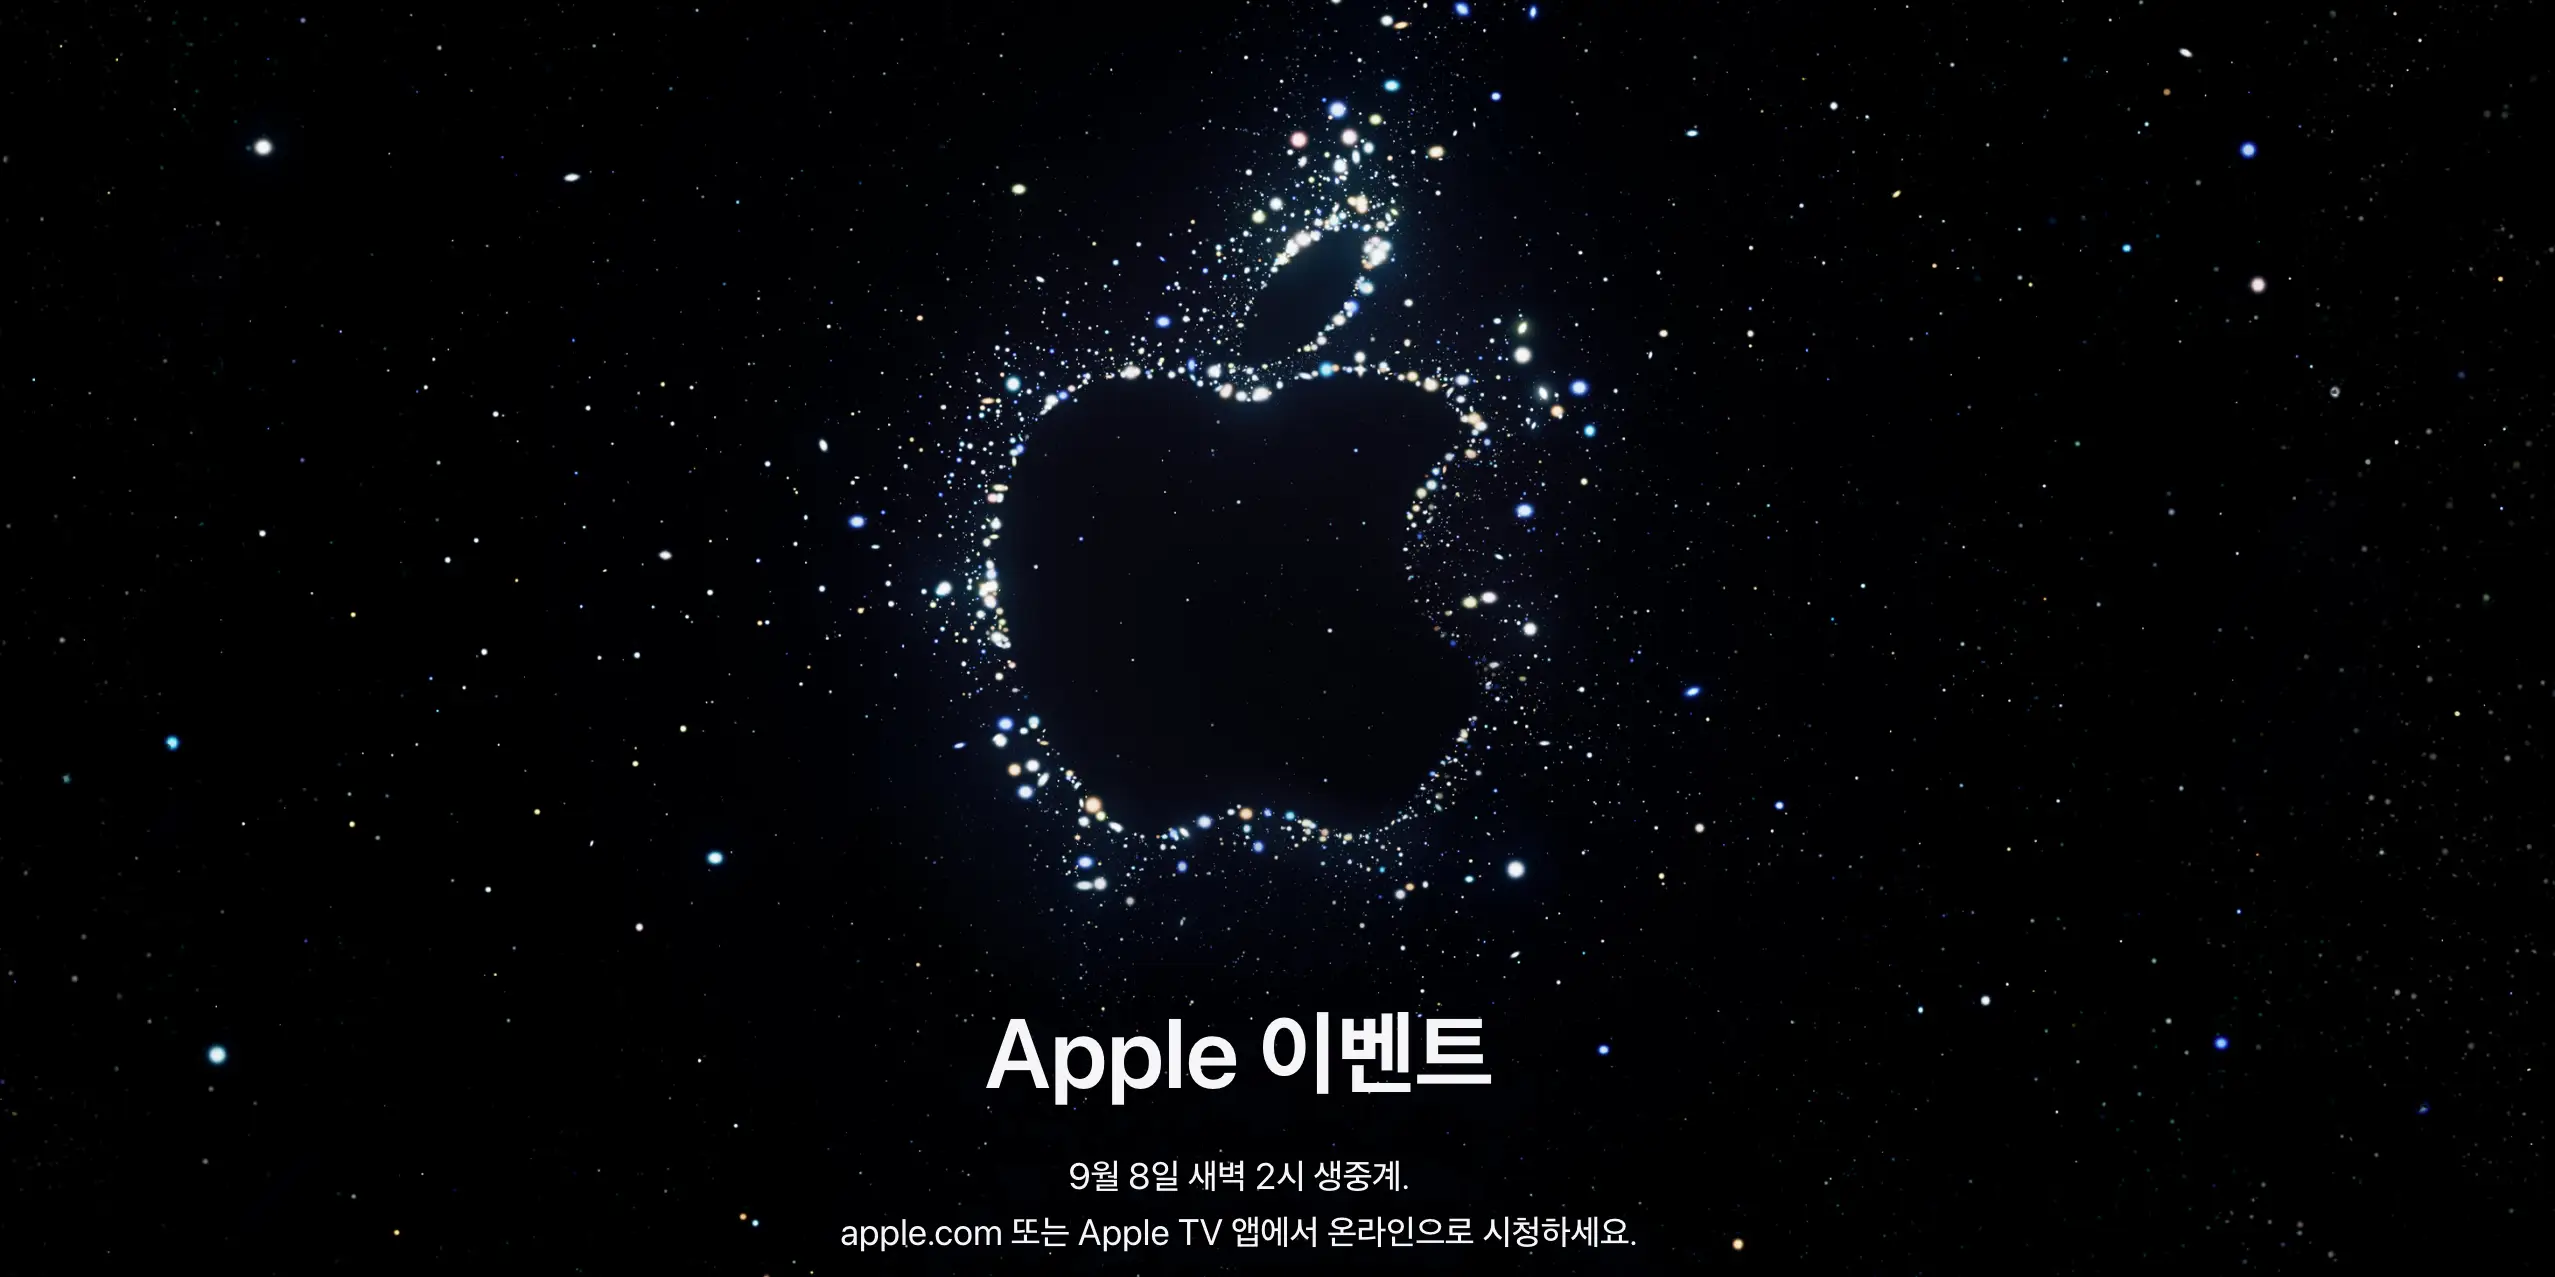 Apple-이벤트-아이폰14-공개